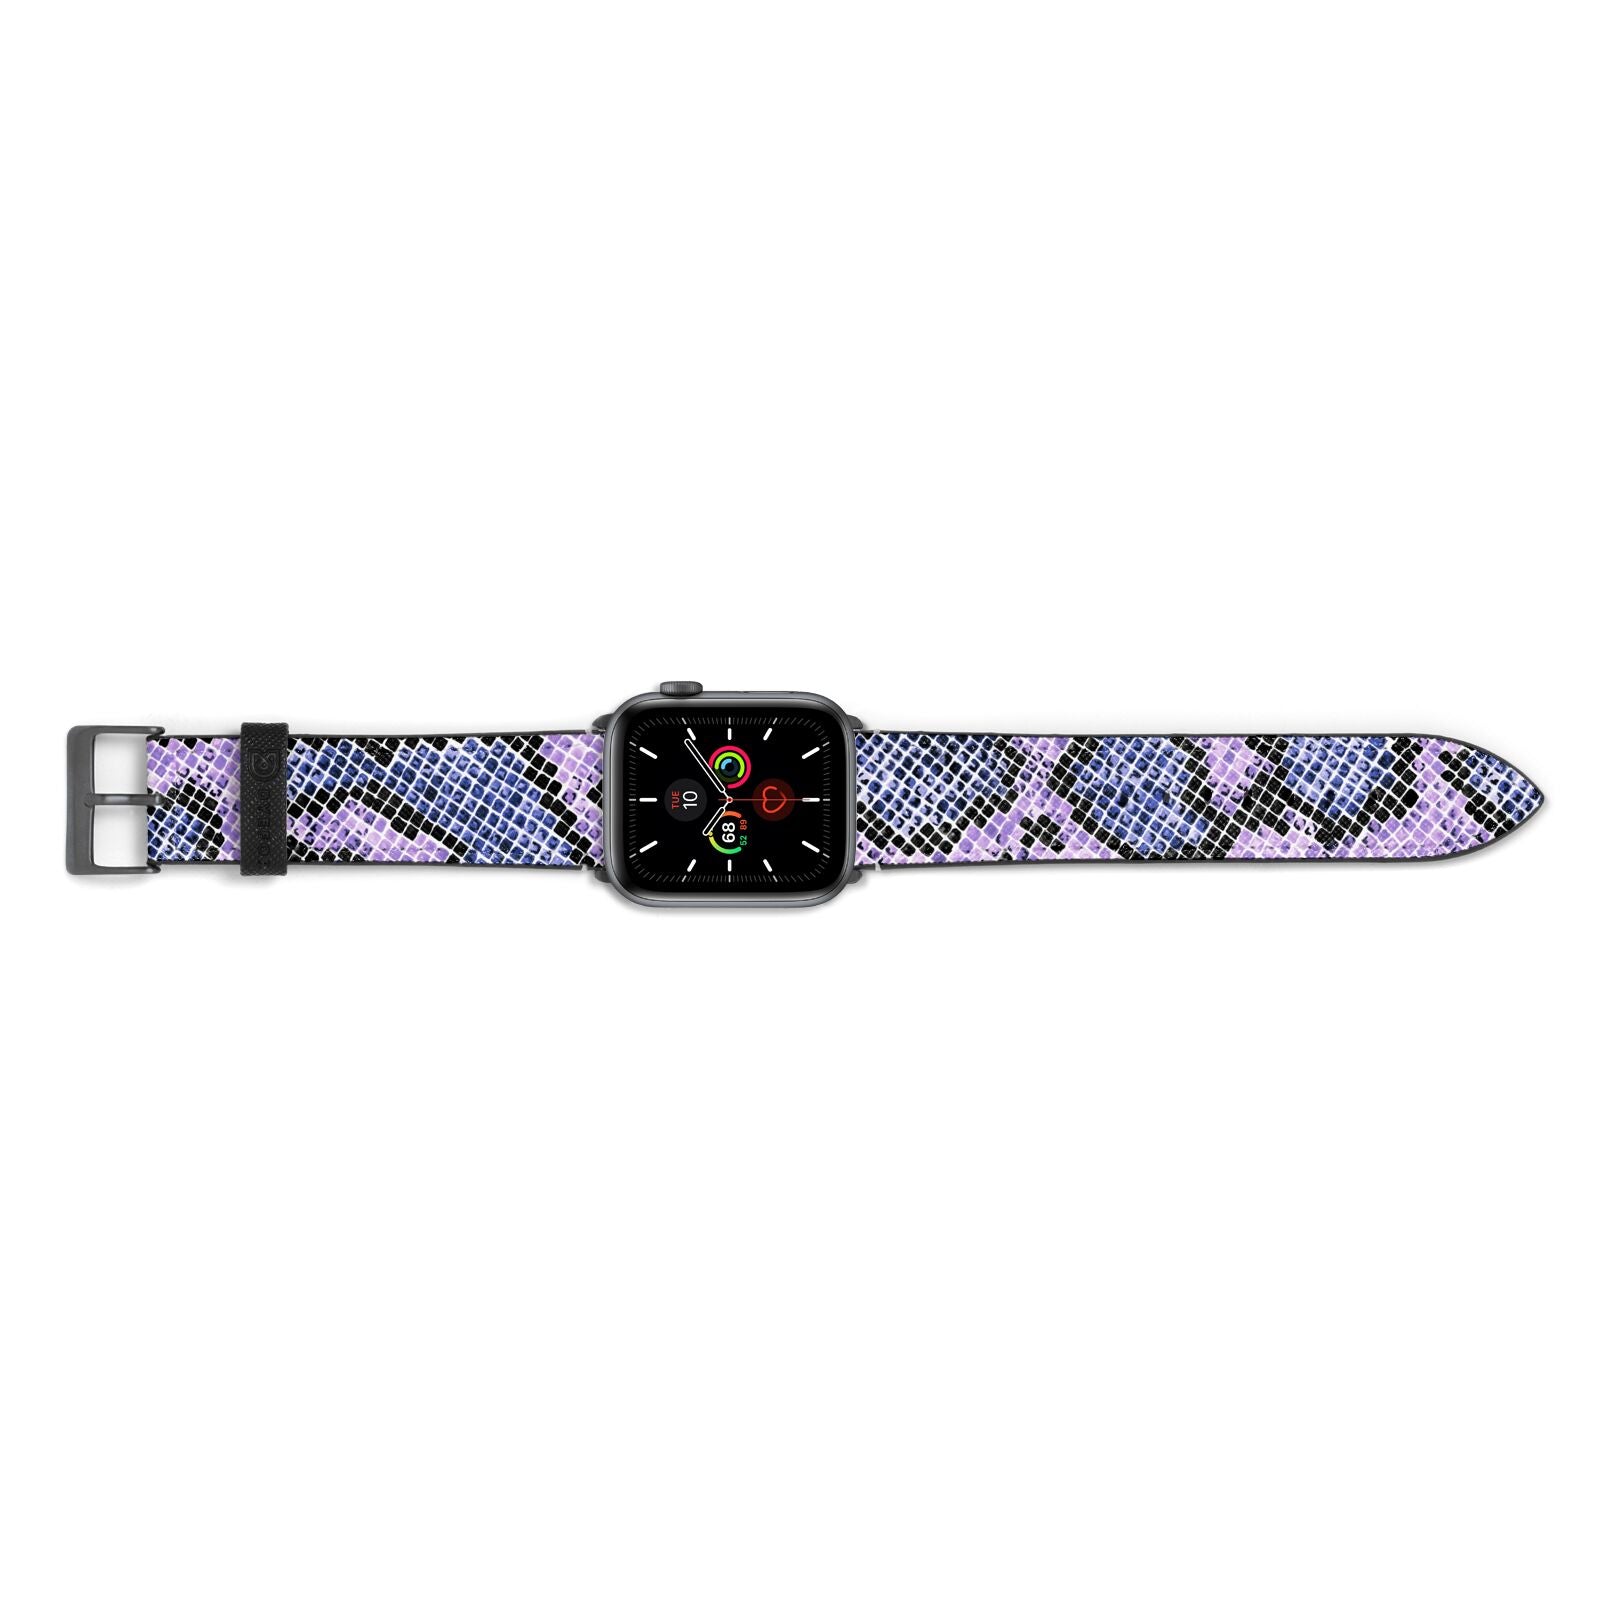 Purple And Blue Snakeskin Apple Watch Strap Landscape Image Space Grey Hardware